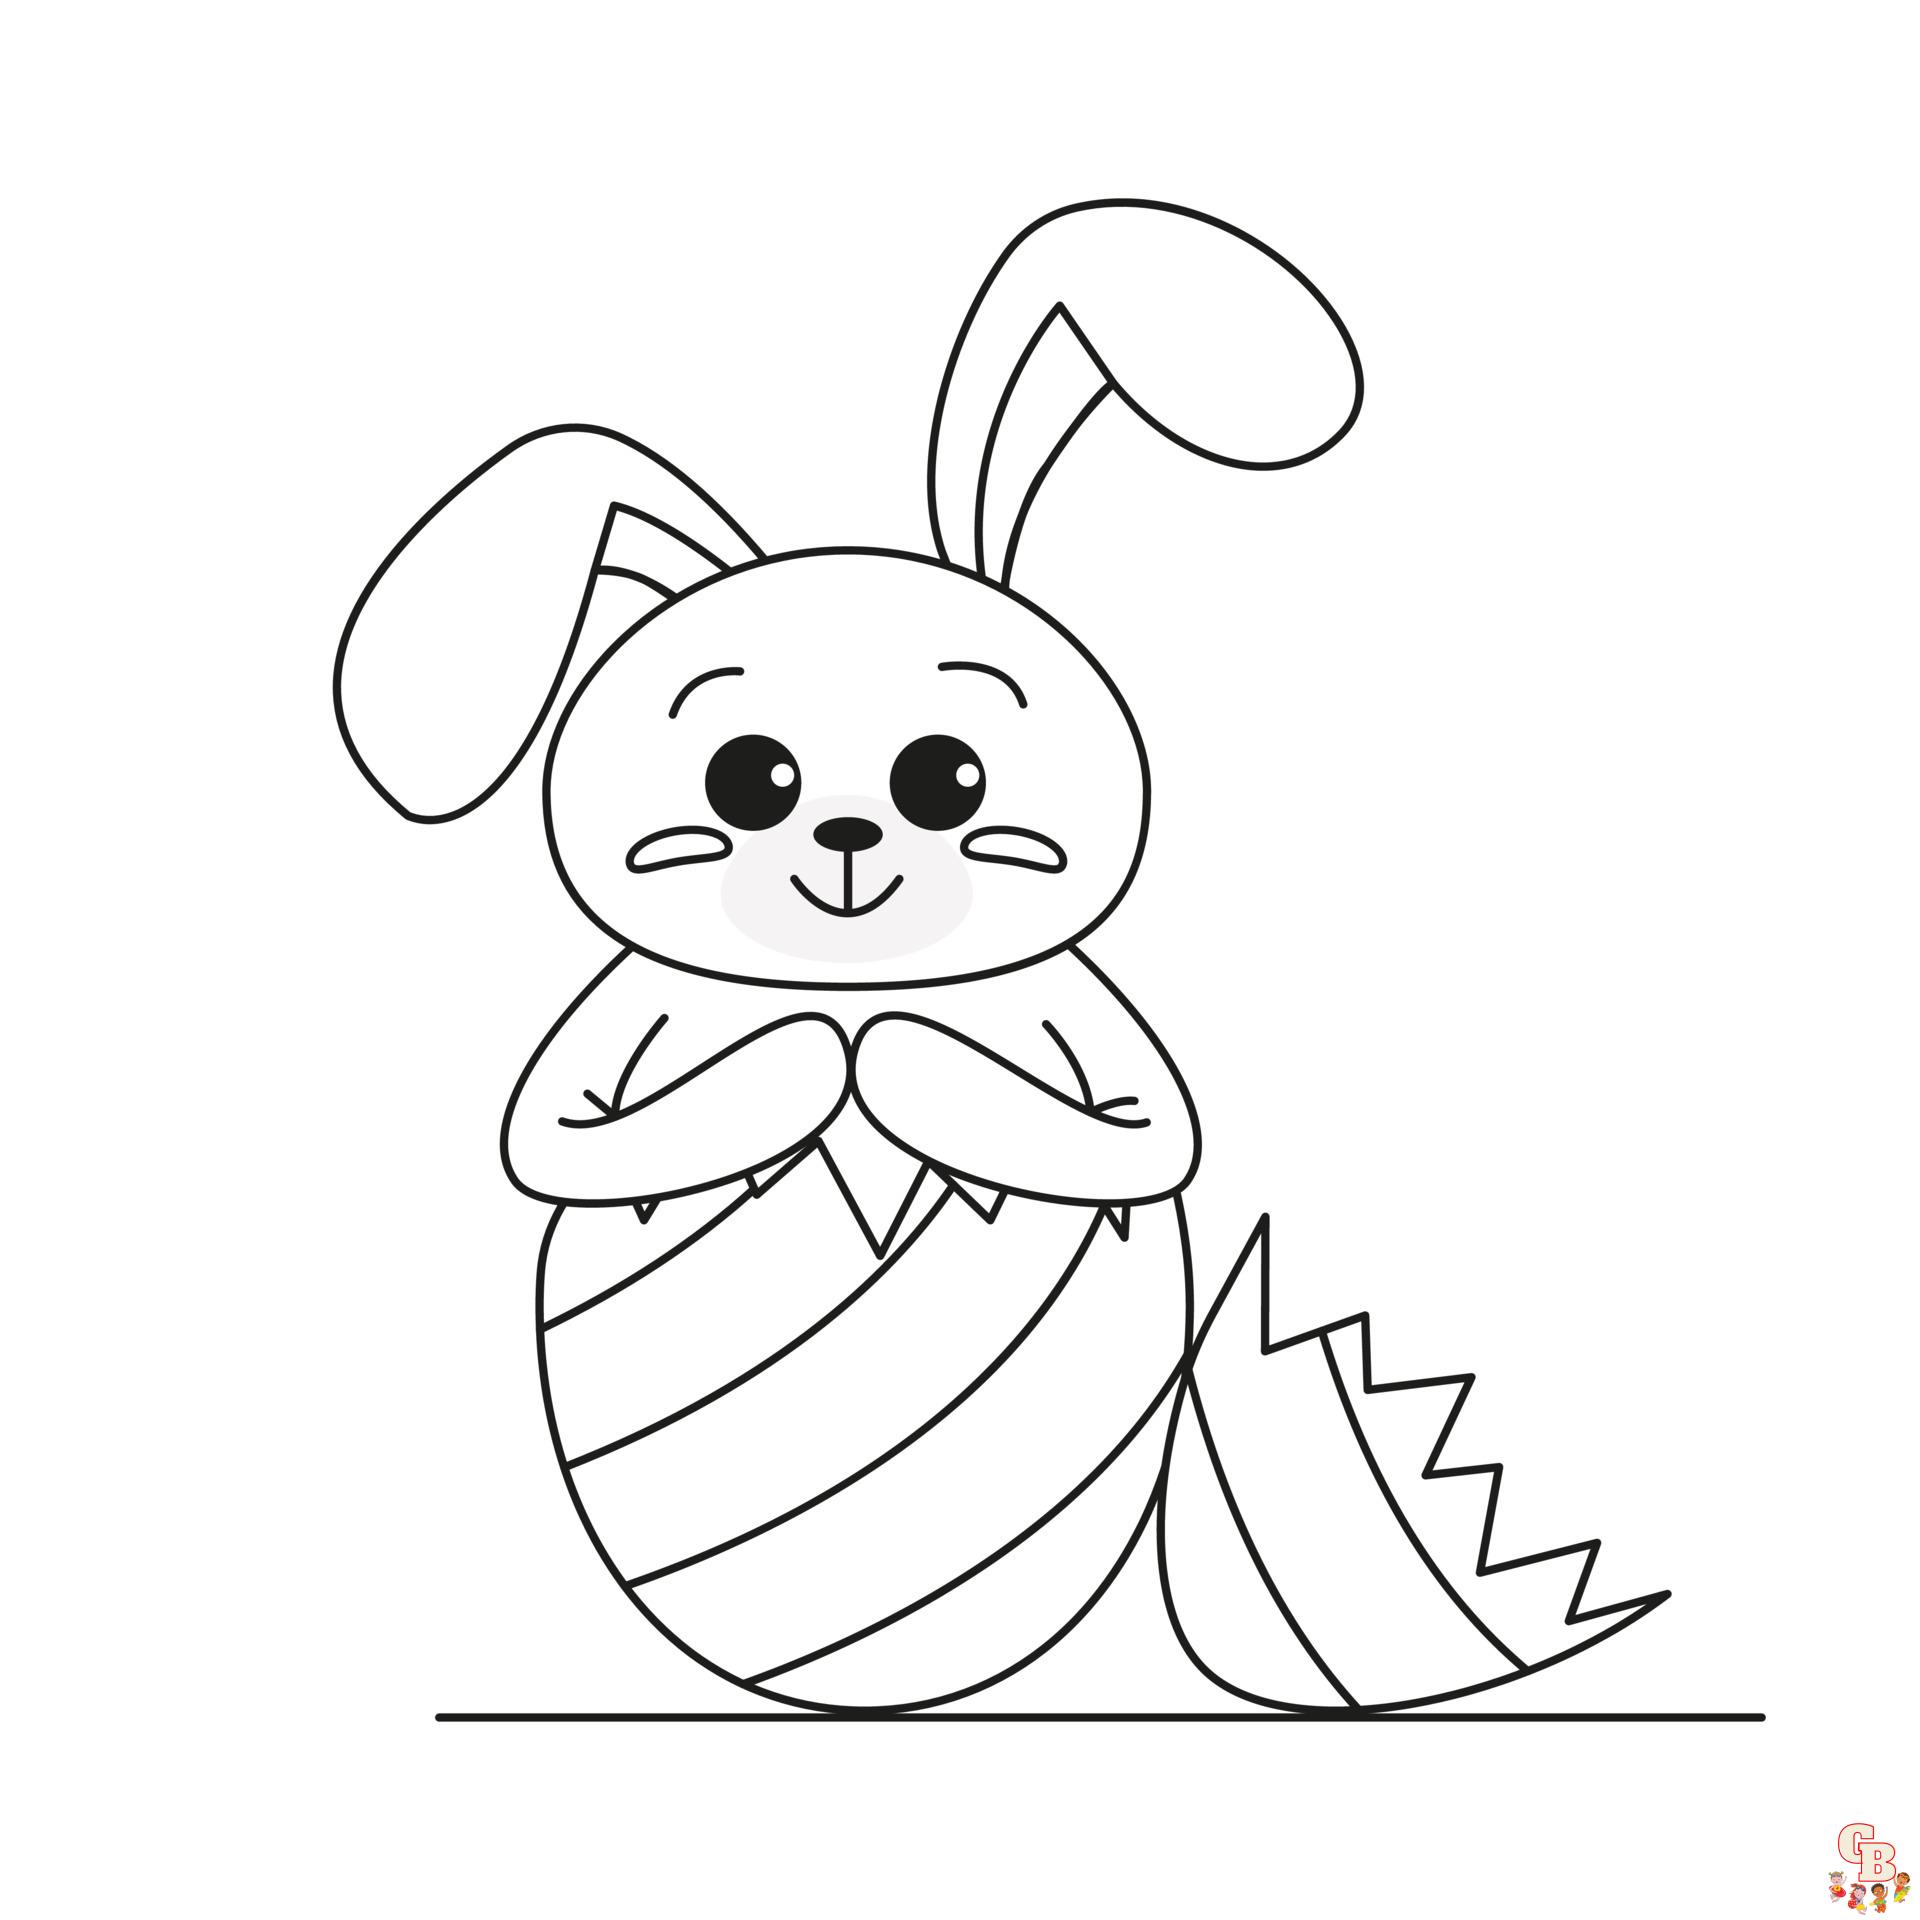 Dibujos animados de conejo para colorear, Pascua, realista, saltando, lindo, con flores